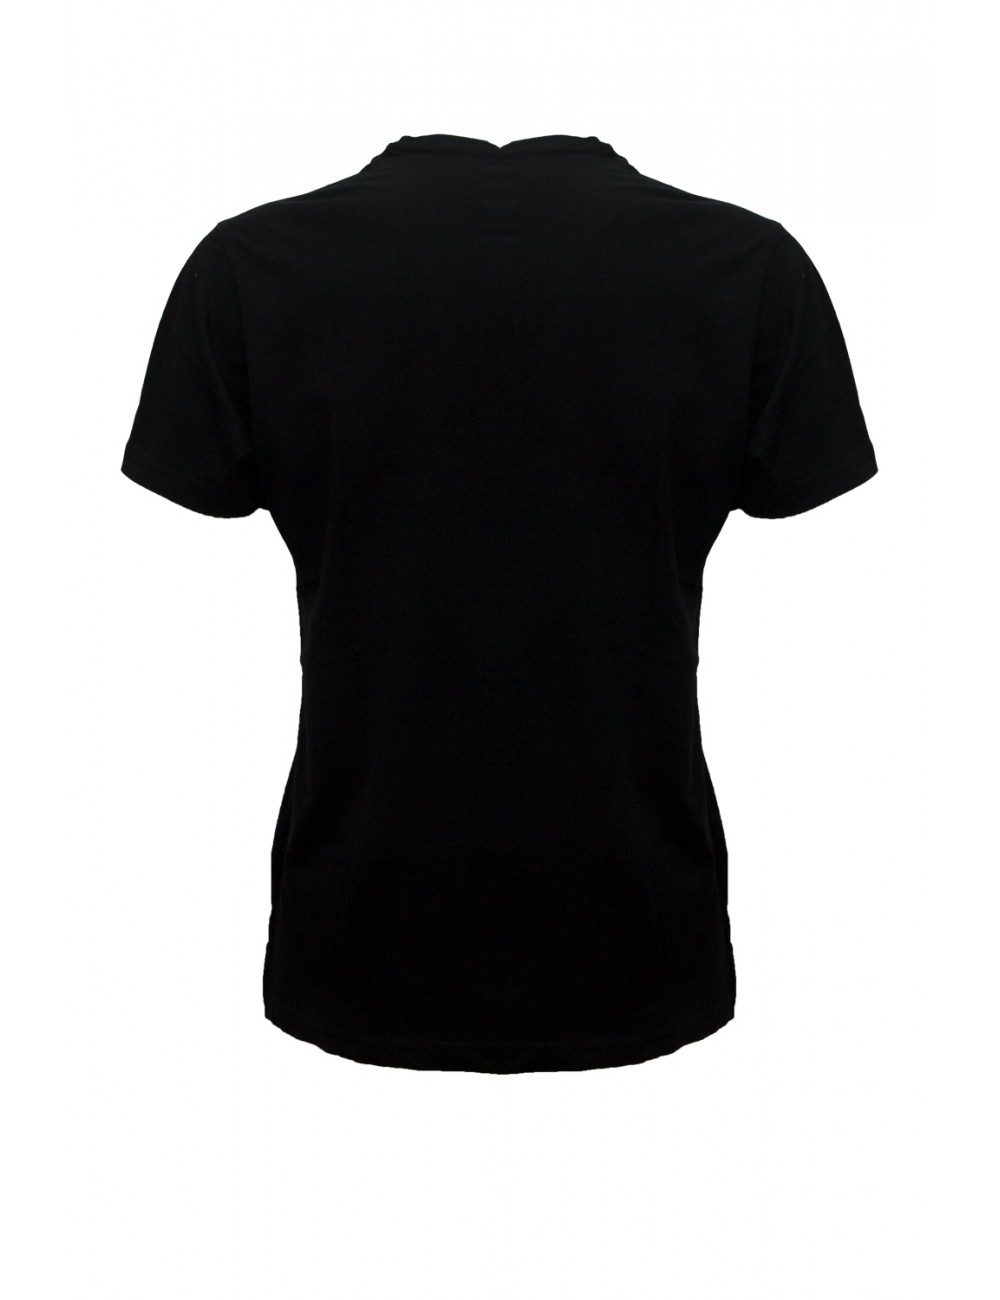 t-shirt censured UOMO BLACK - TM 3979 T JETE 90 vista frontale